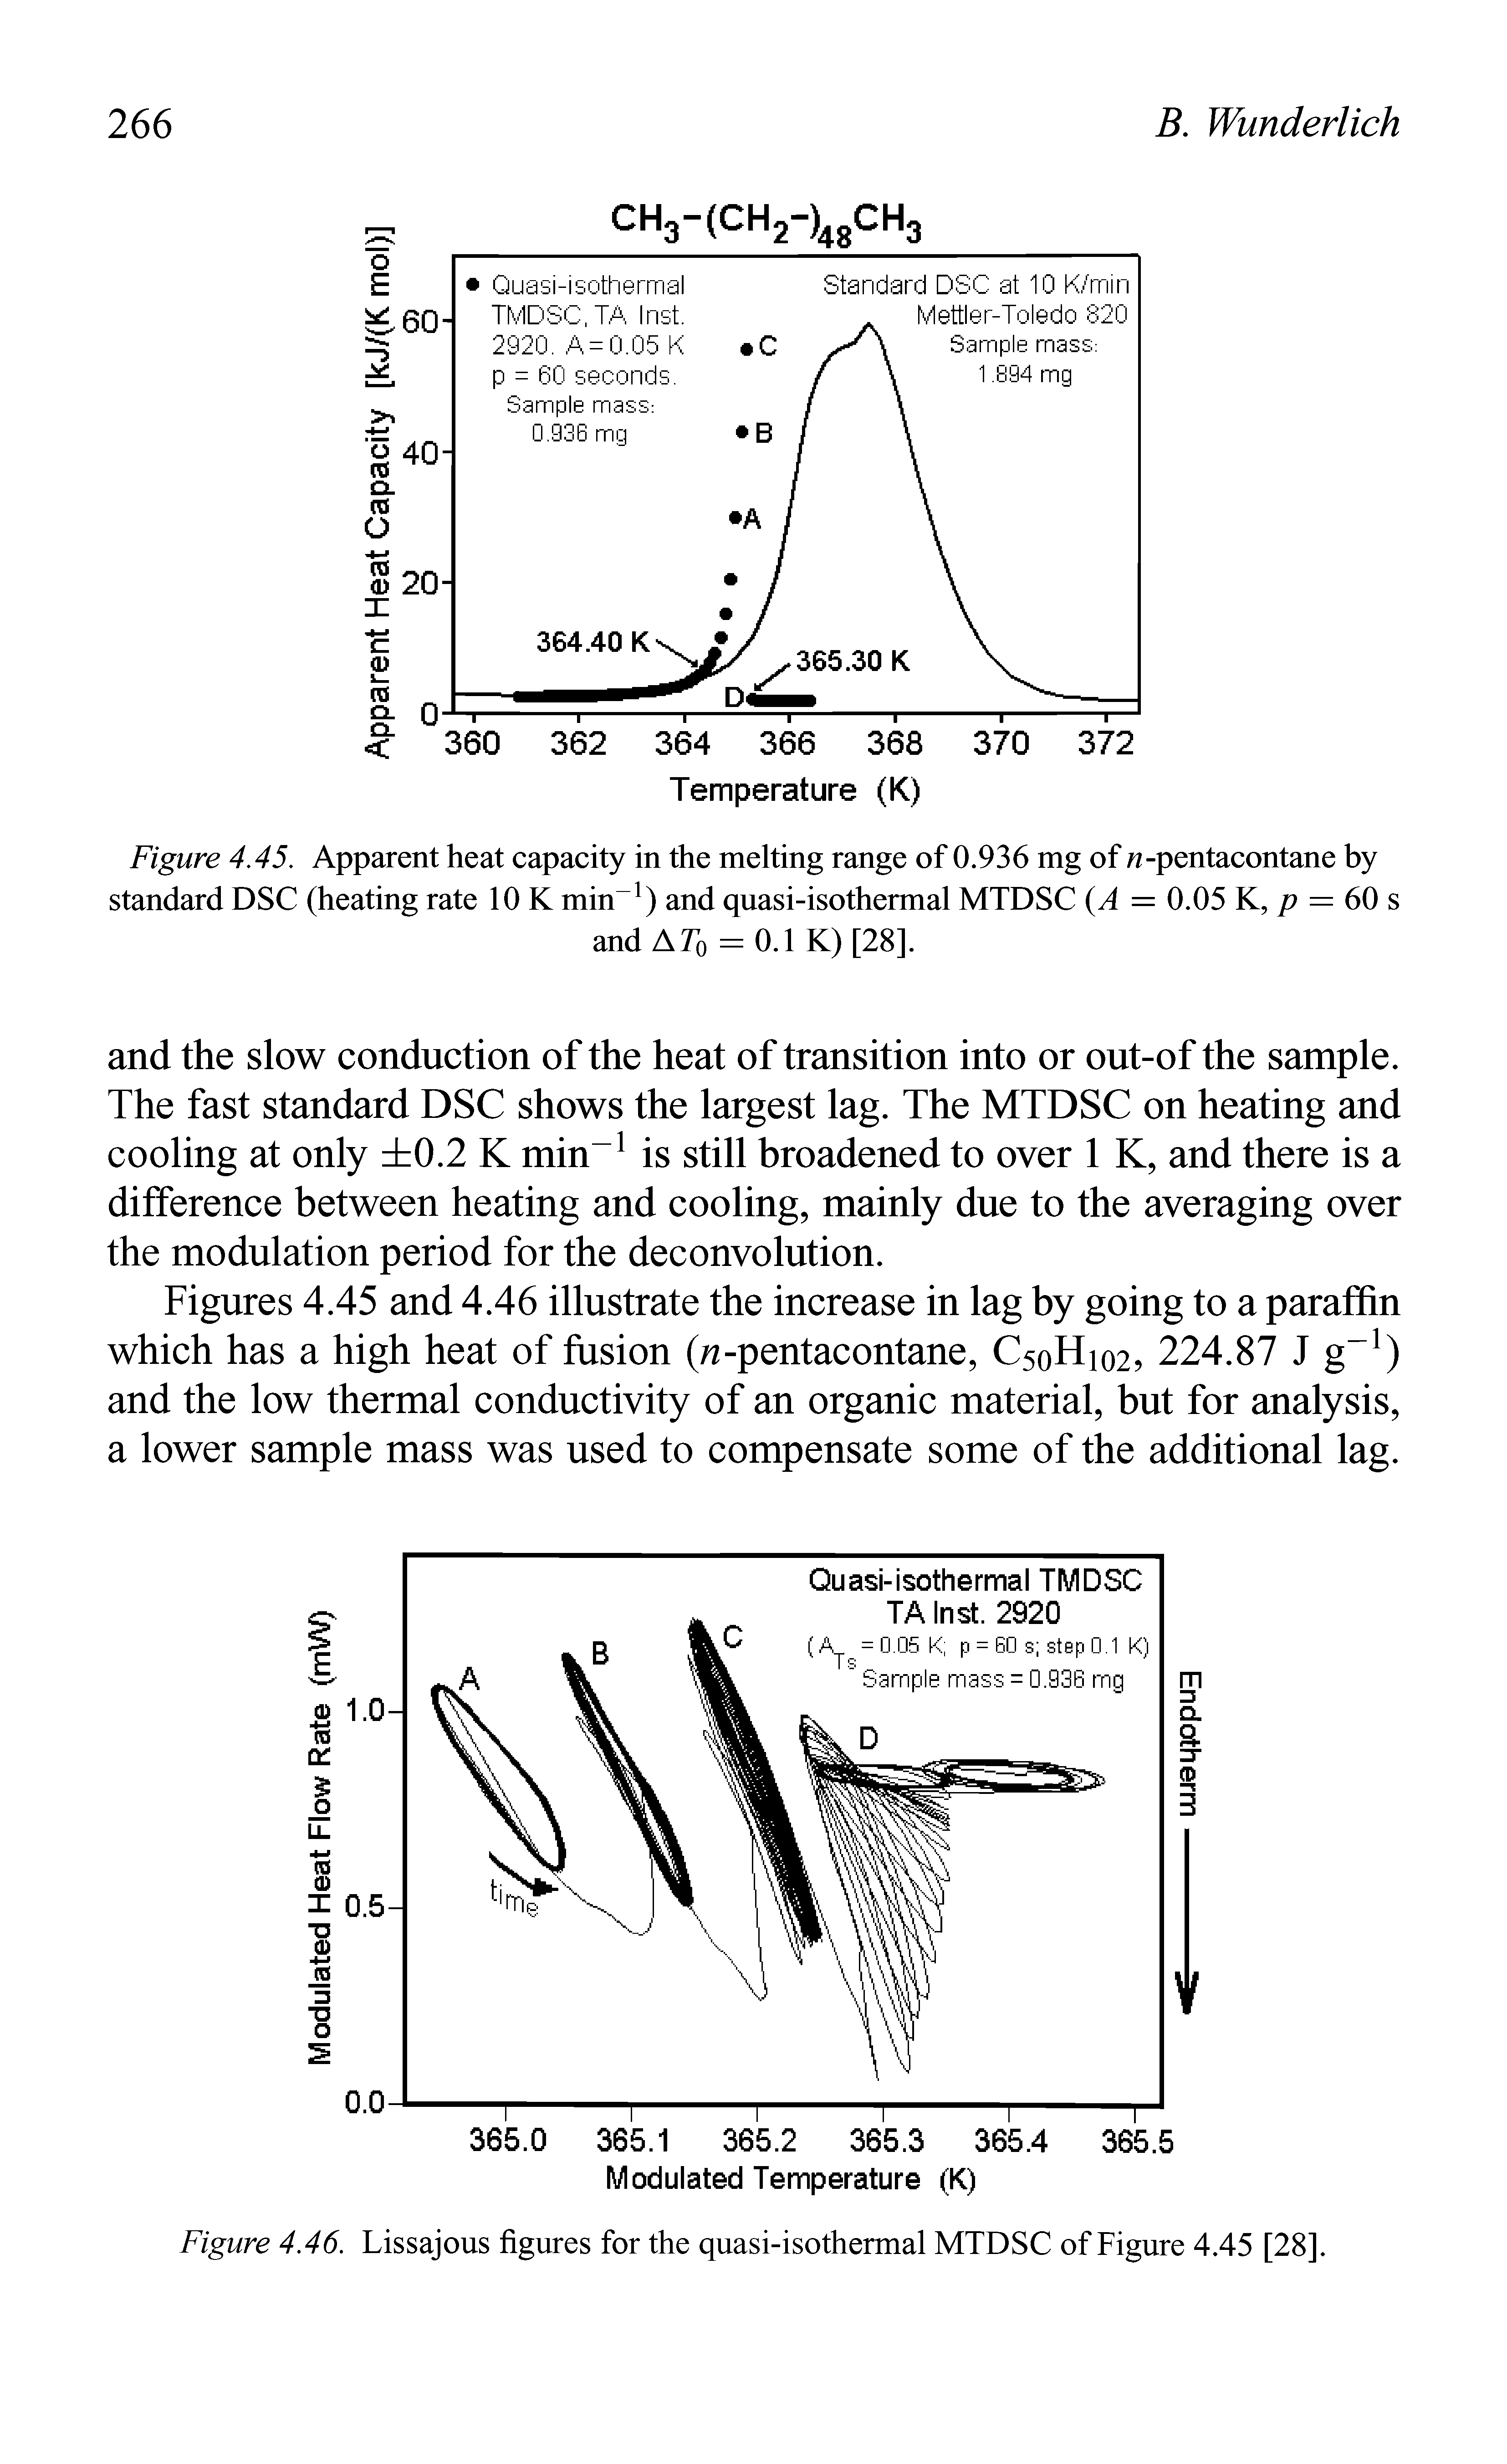 Figure 4.46. Lissajous figures for the quasi-isothermal MTDSC of Figure 4.45 [28].